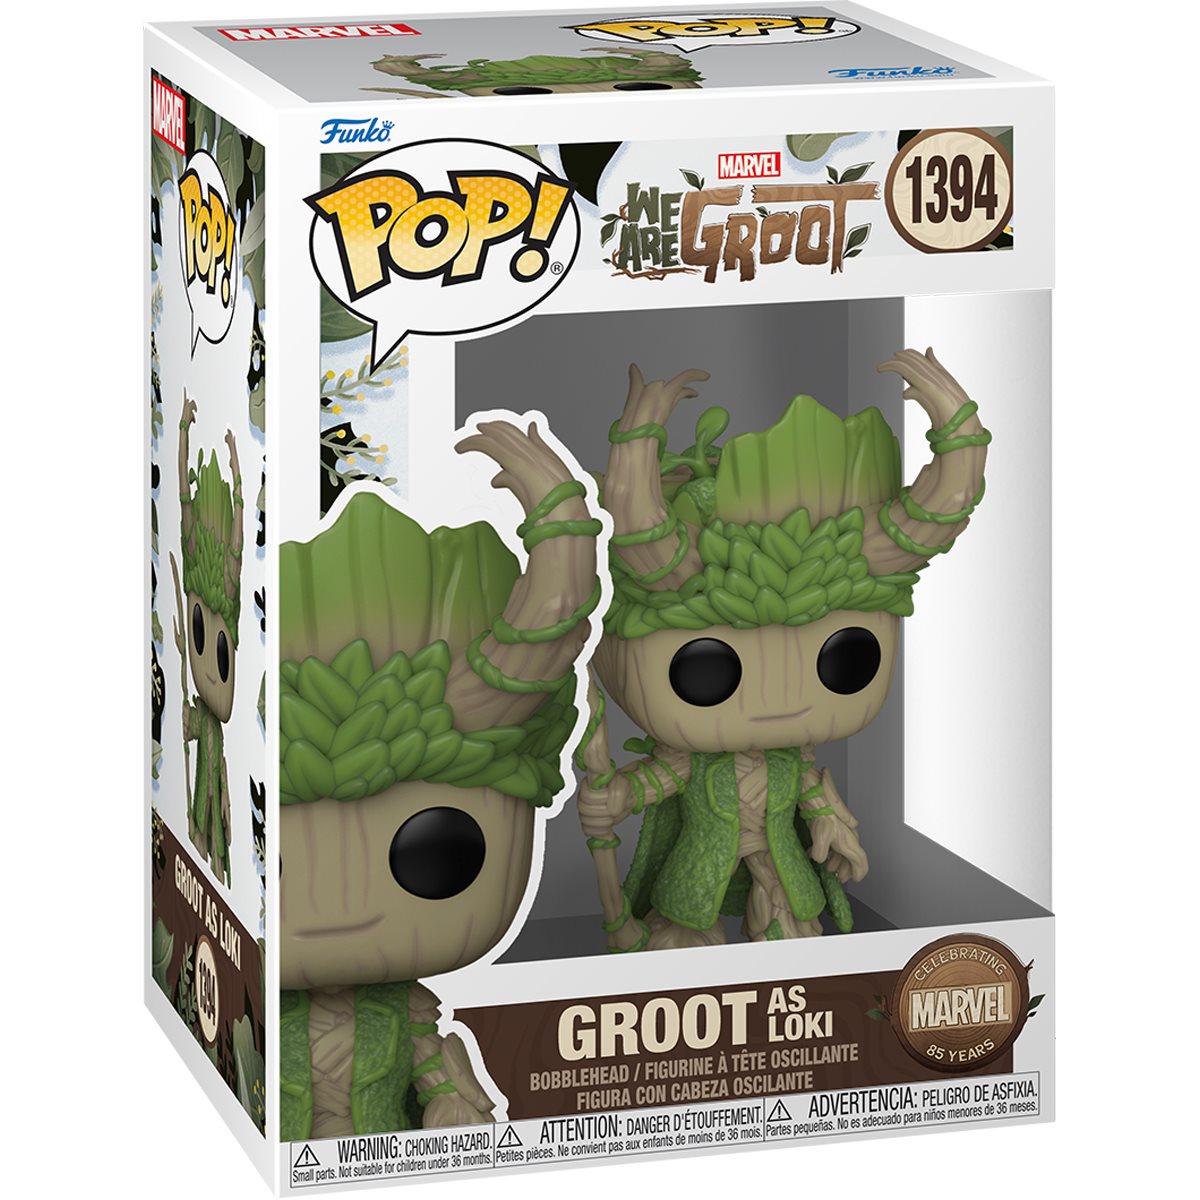 We Are Groot as Loki Funko Pop! Vinyl Figure #1394 Funko